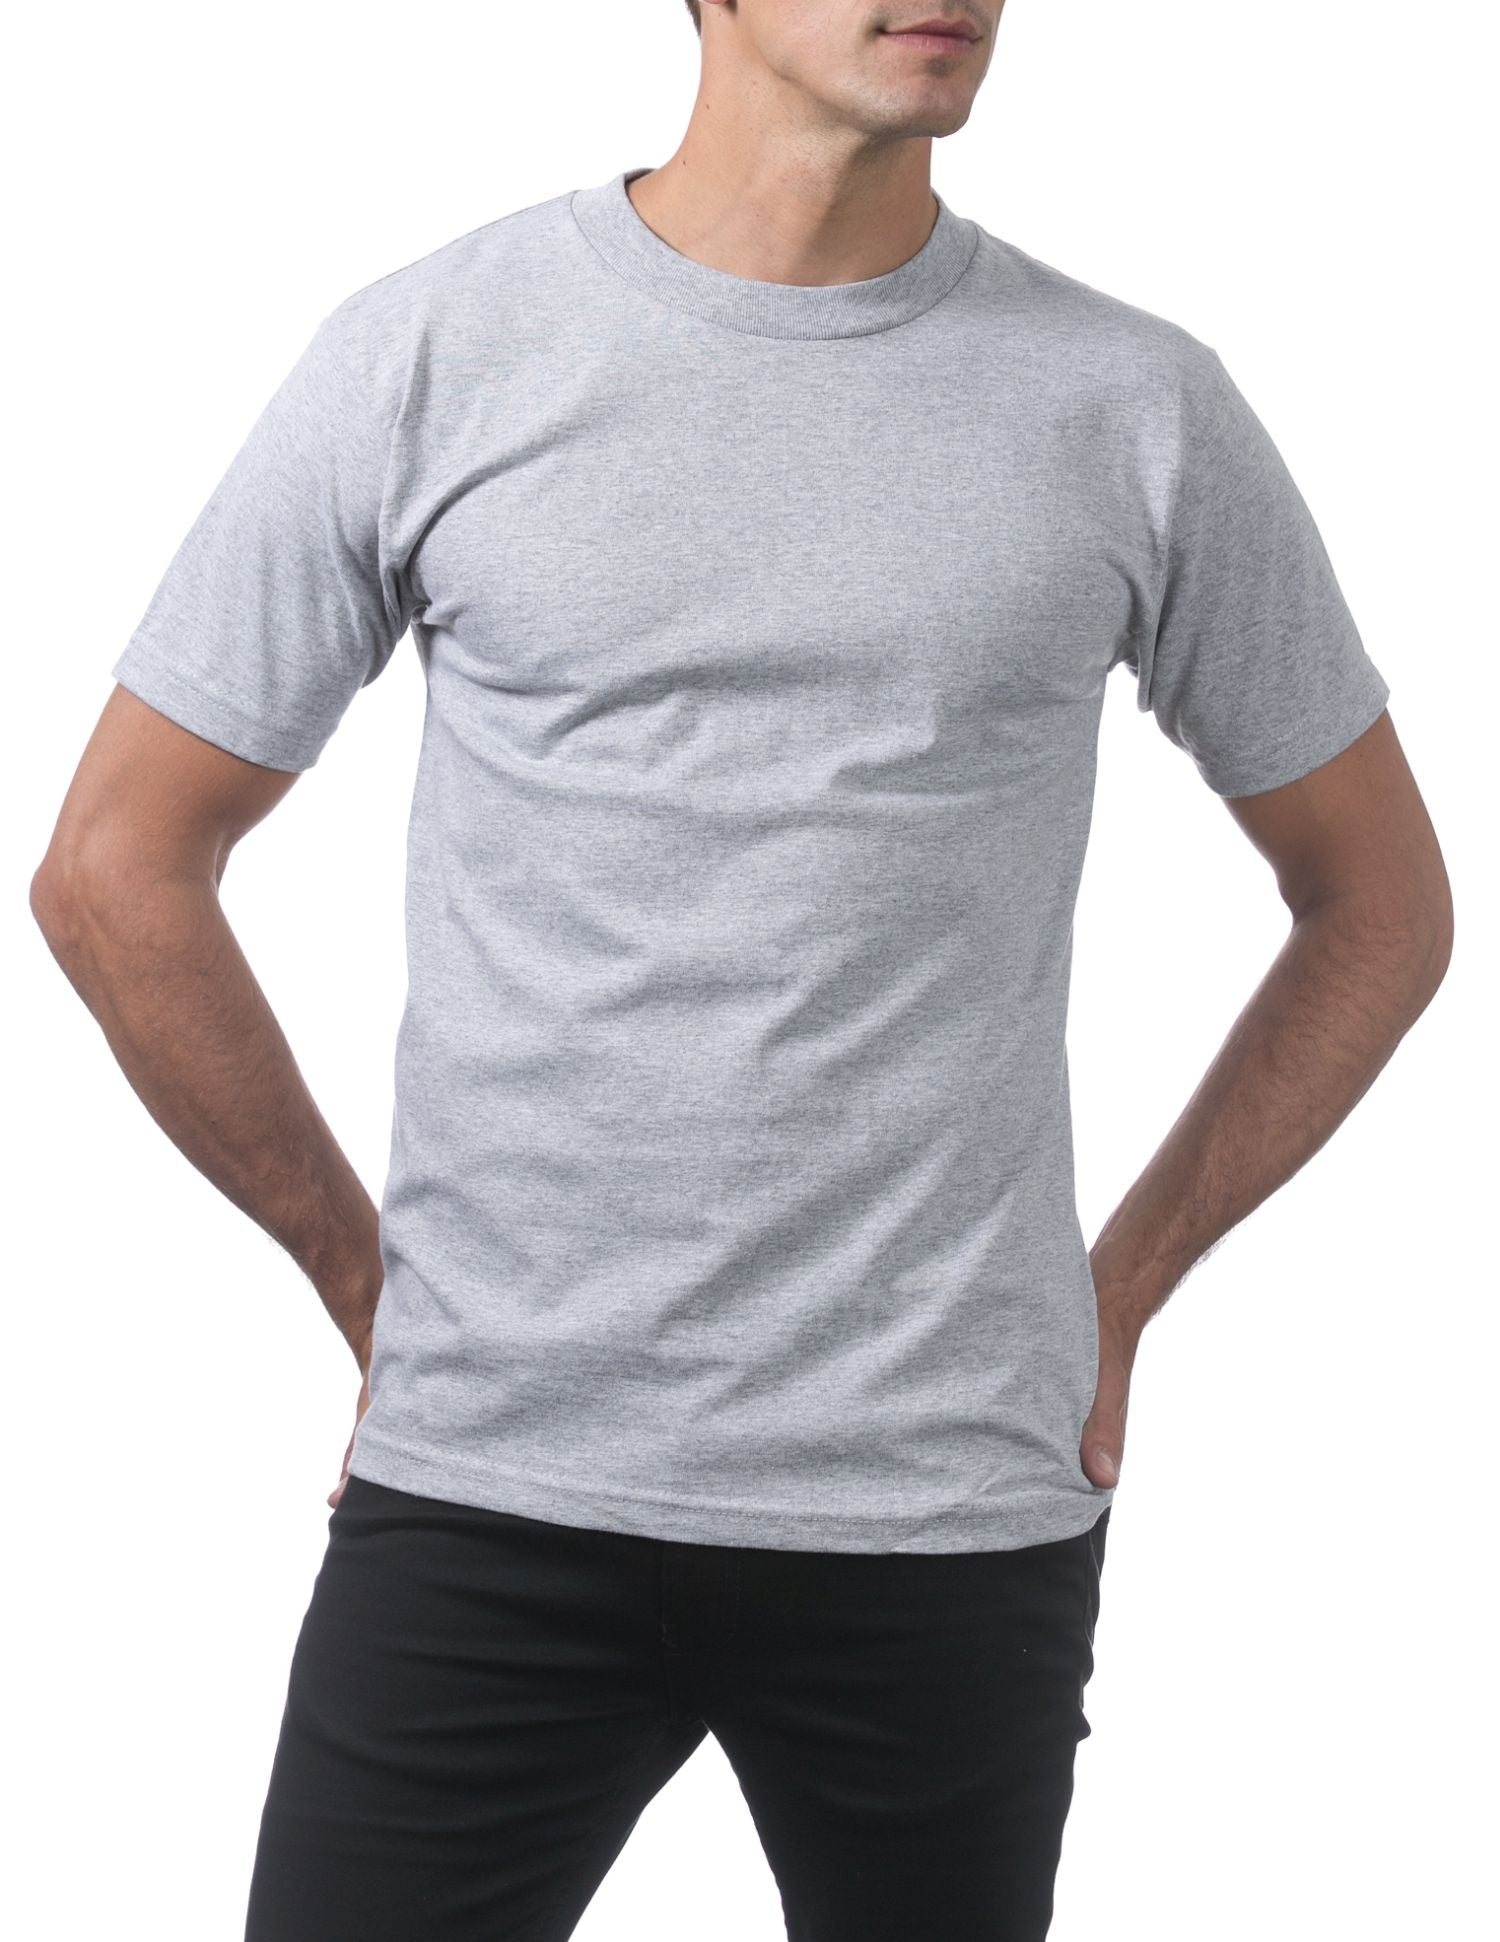 Pro Club Men's Comfort Cotton Short Sleeve T-Shirt - Heather Gray - X-Large - Pro-Distributing